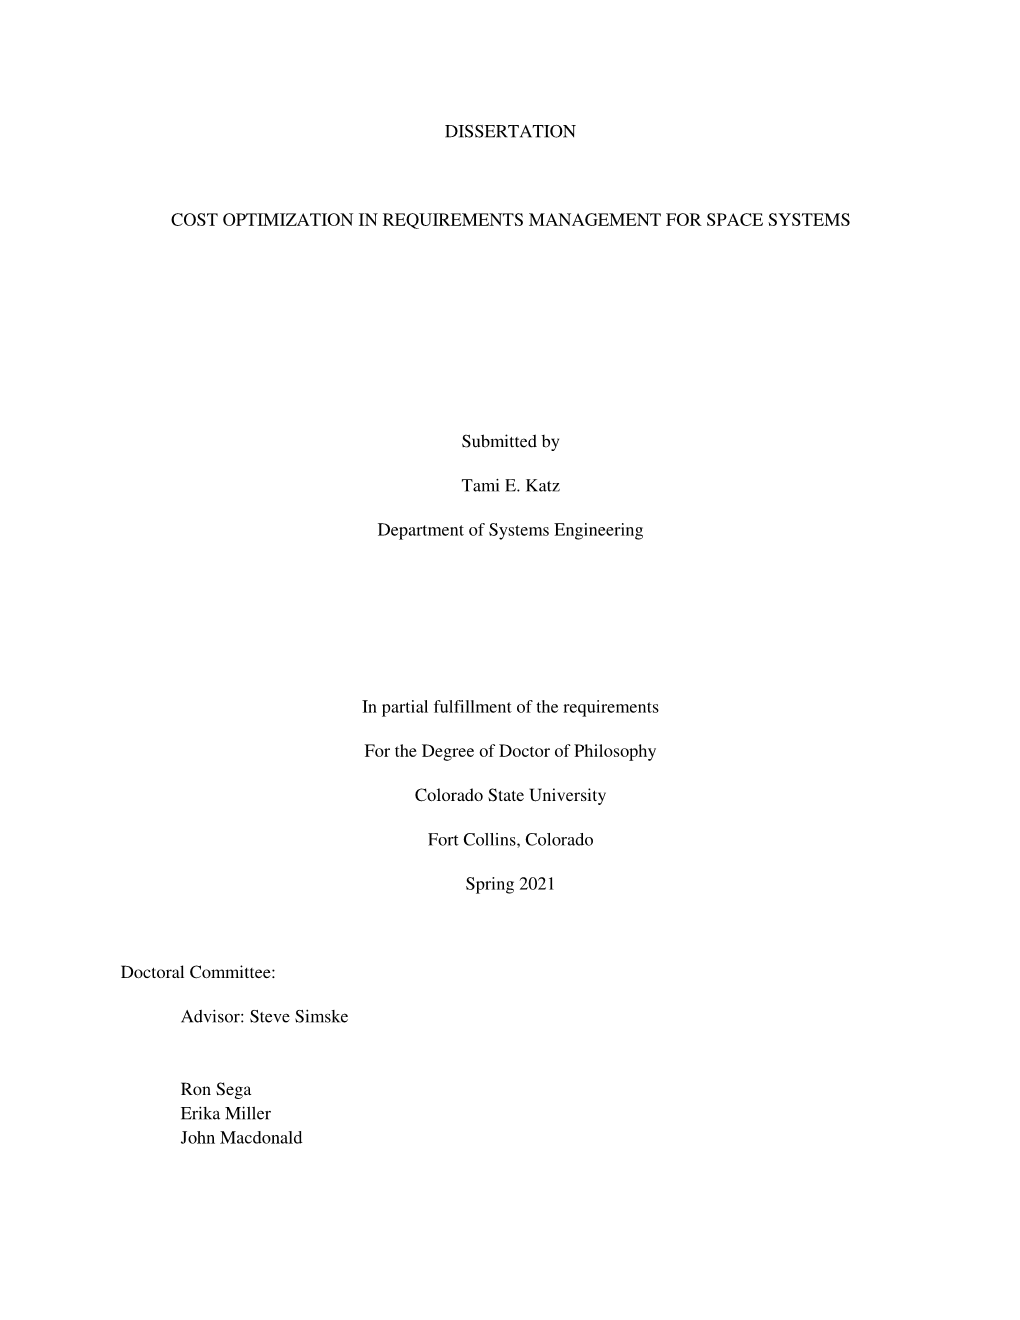 Dissertation Cost Optimization In